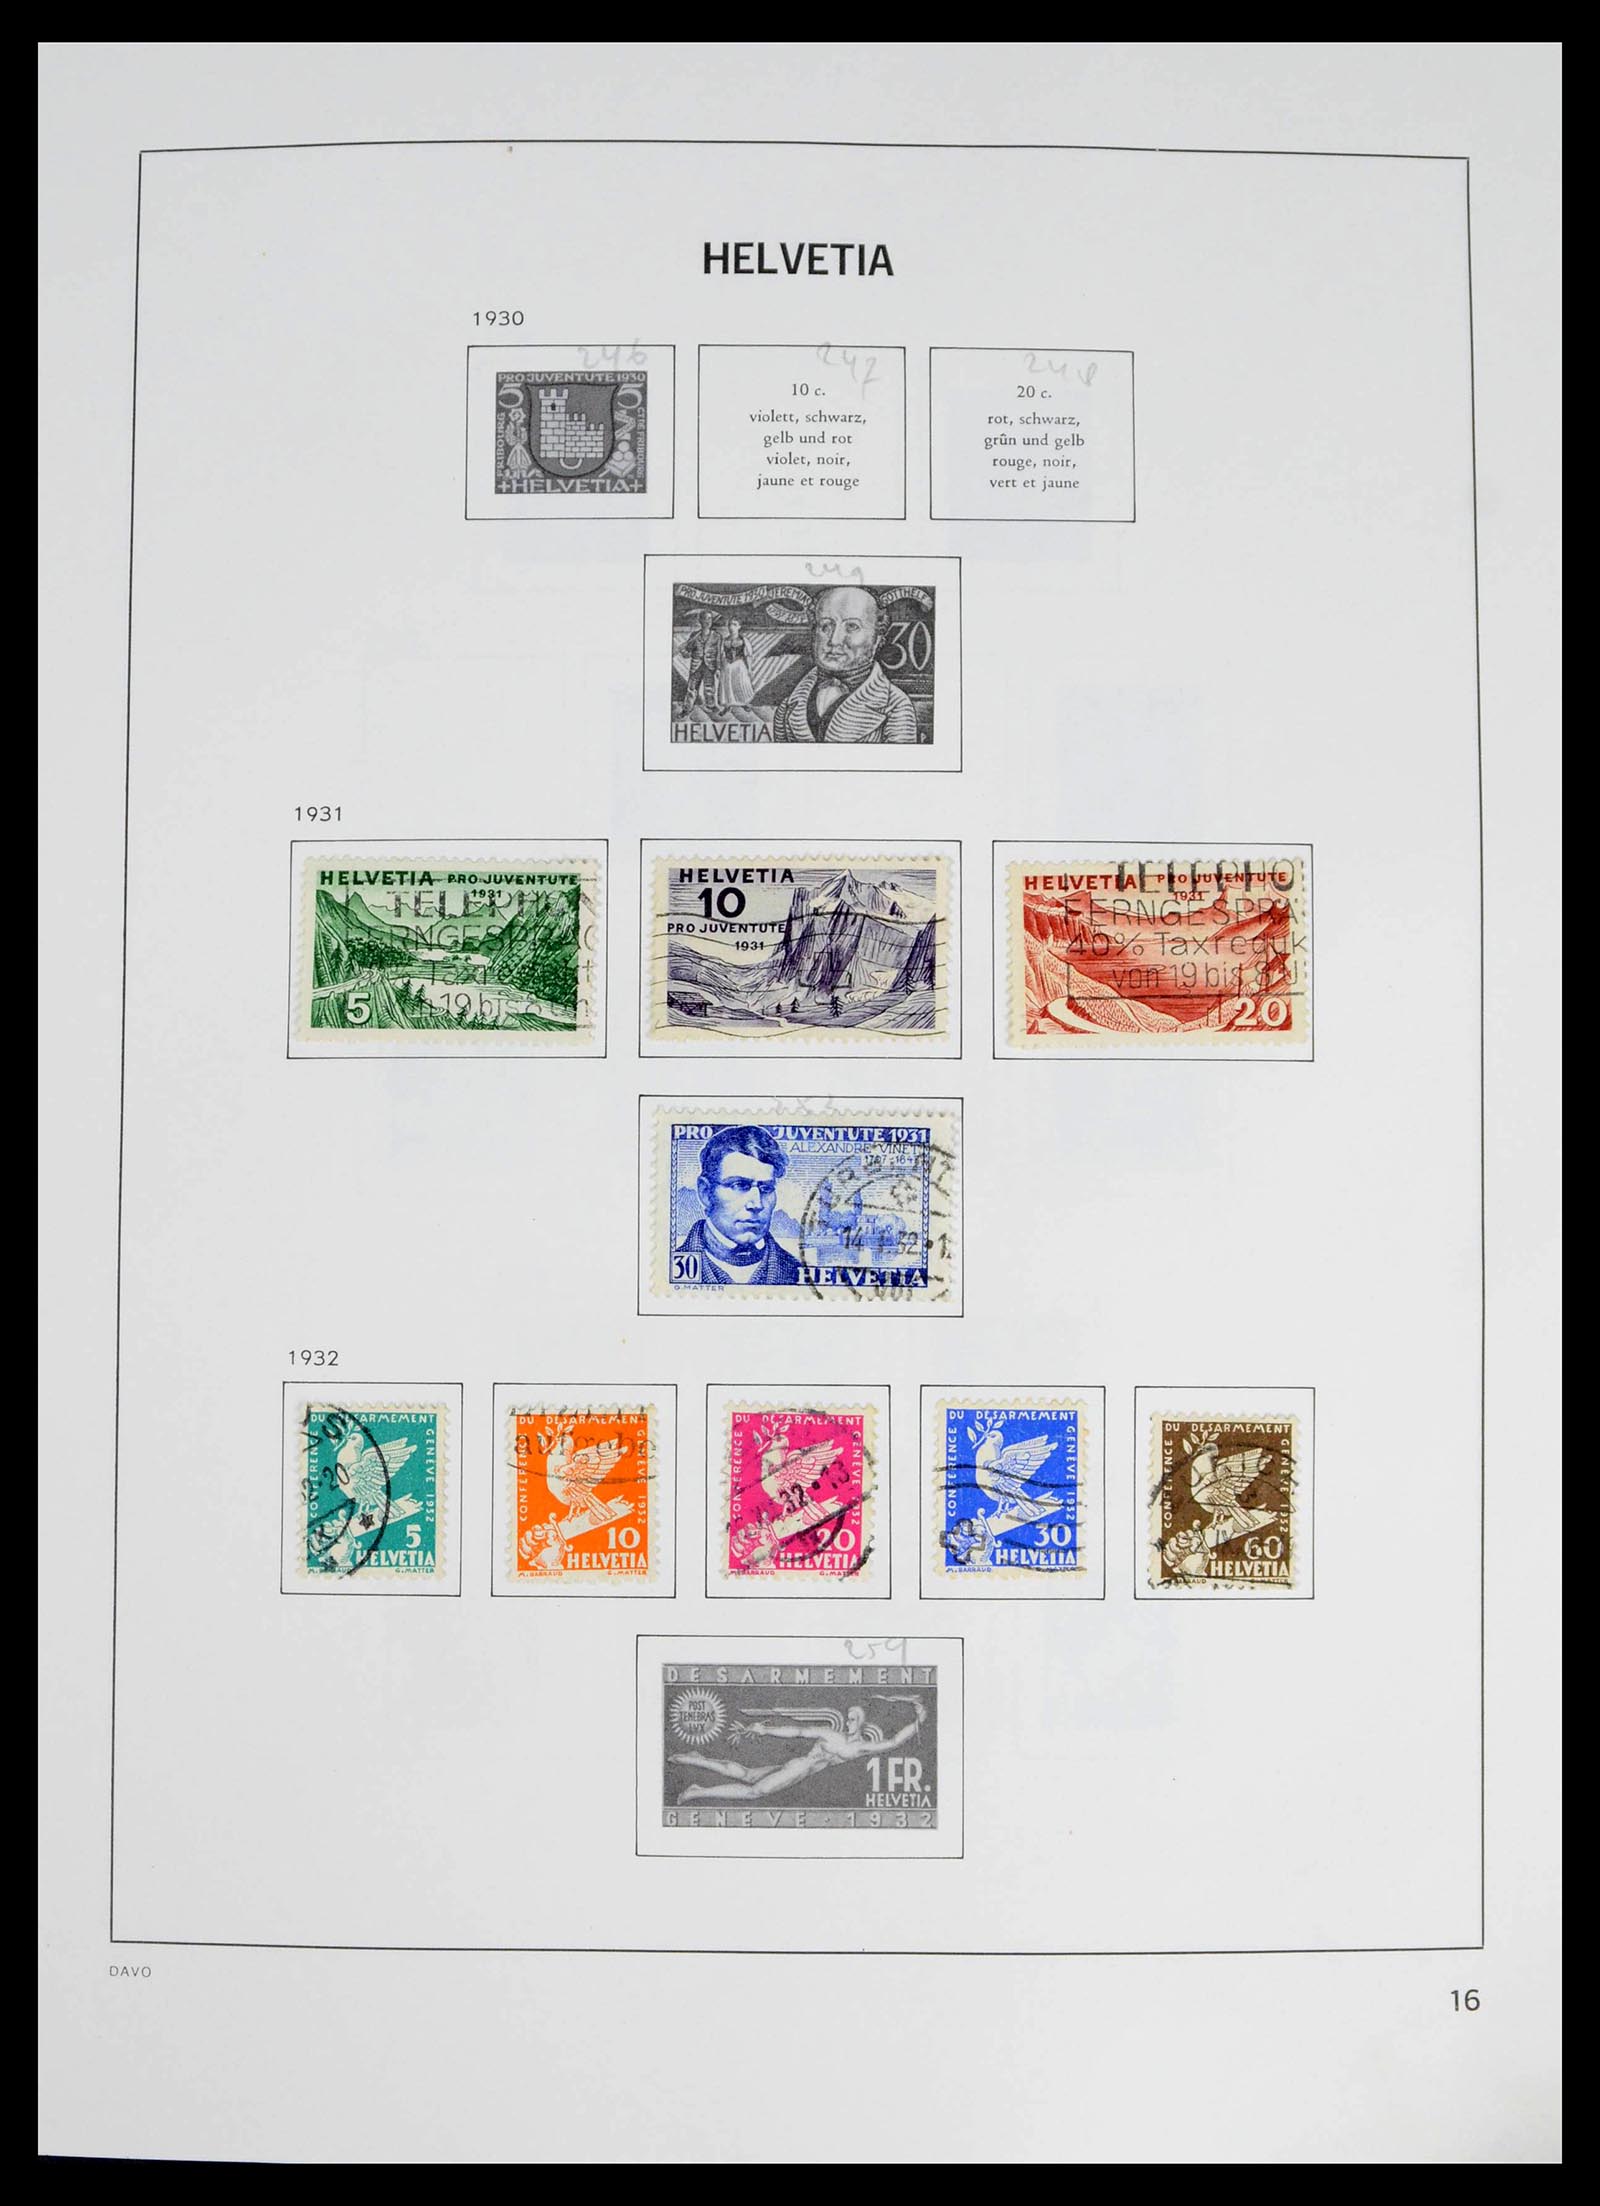 39363 0008 - Stamp collection 39363 Switzerland 1939-2013.